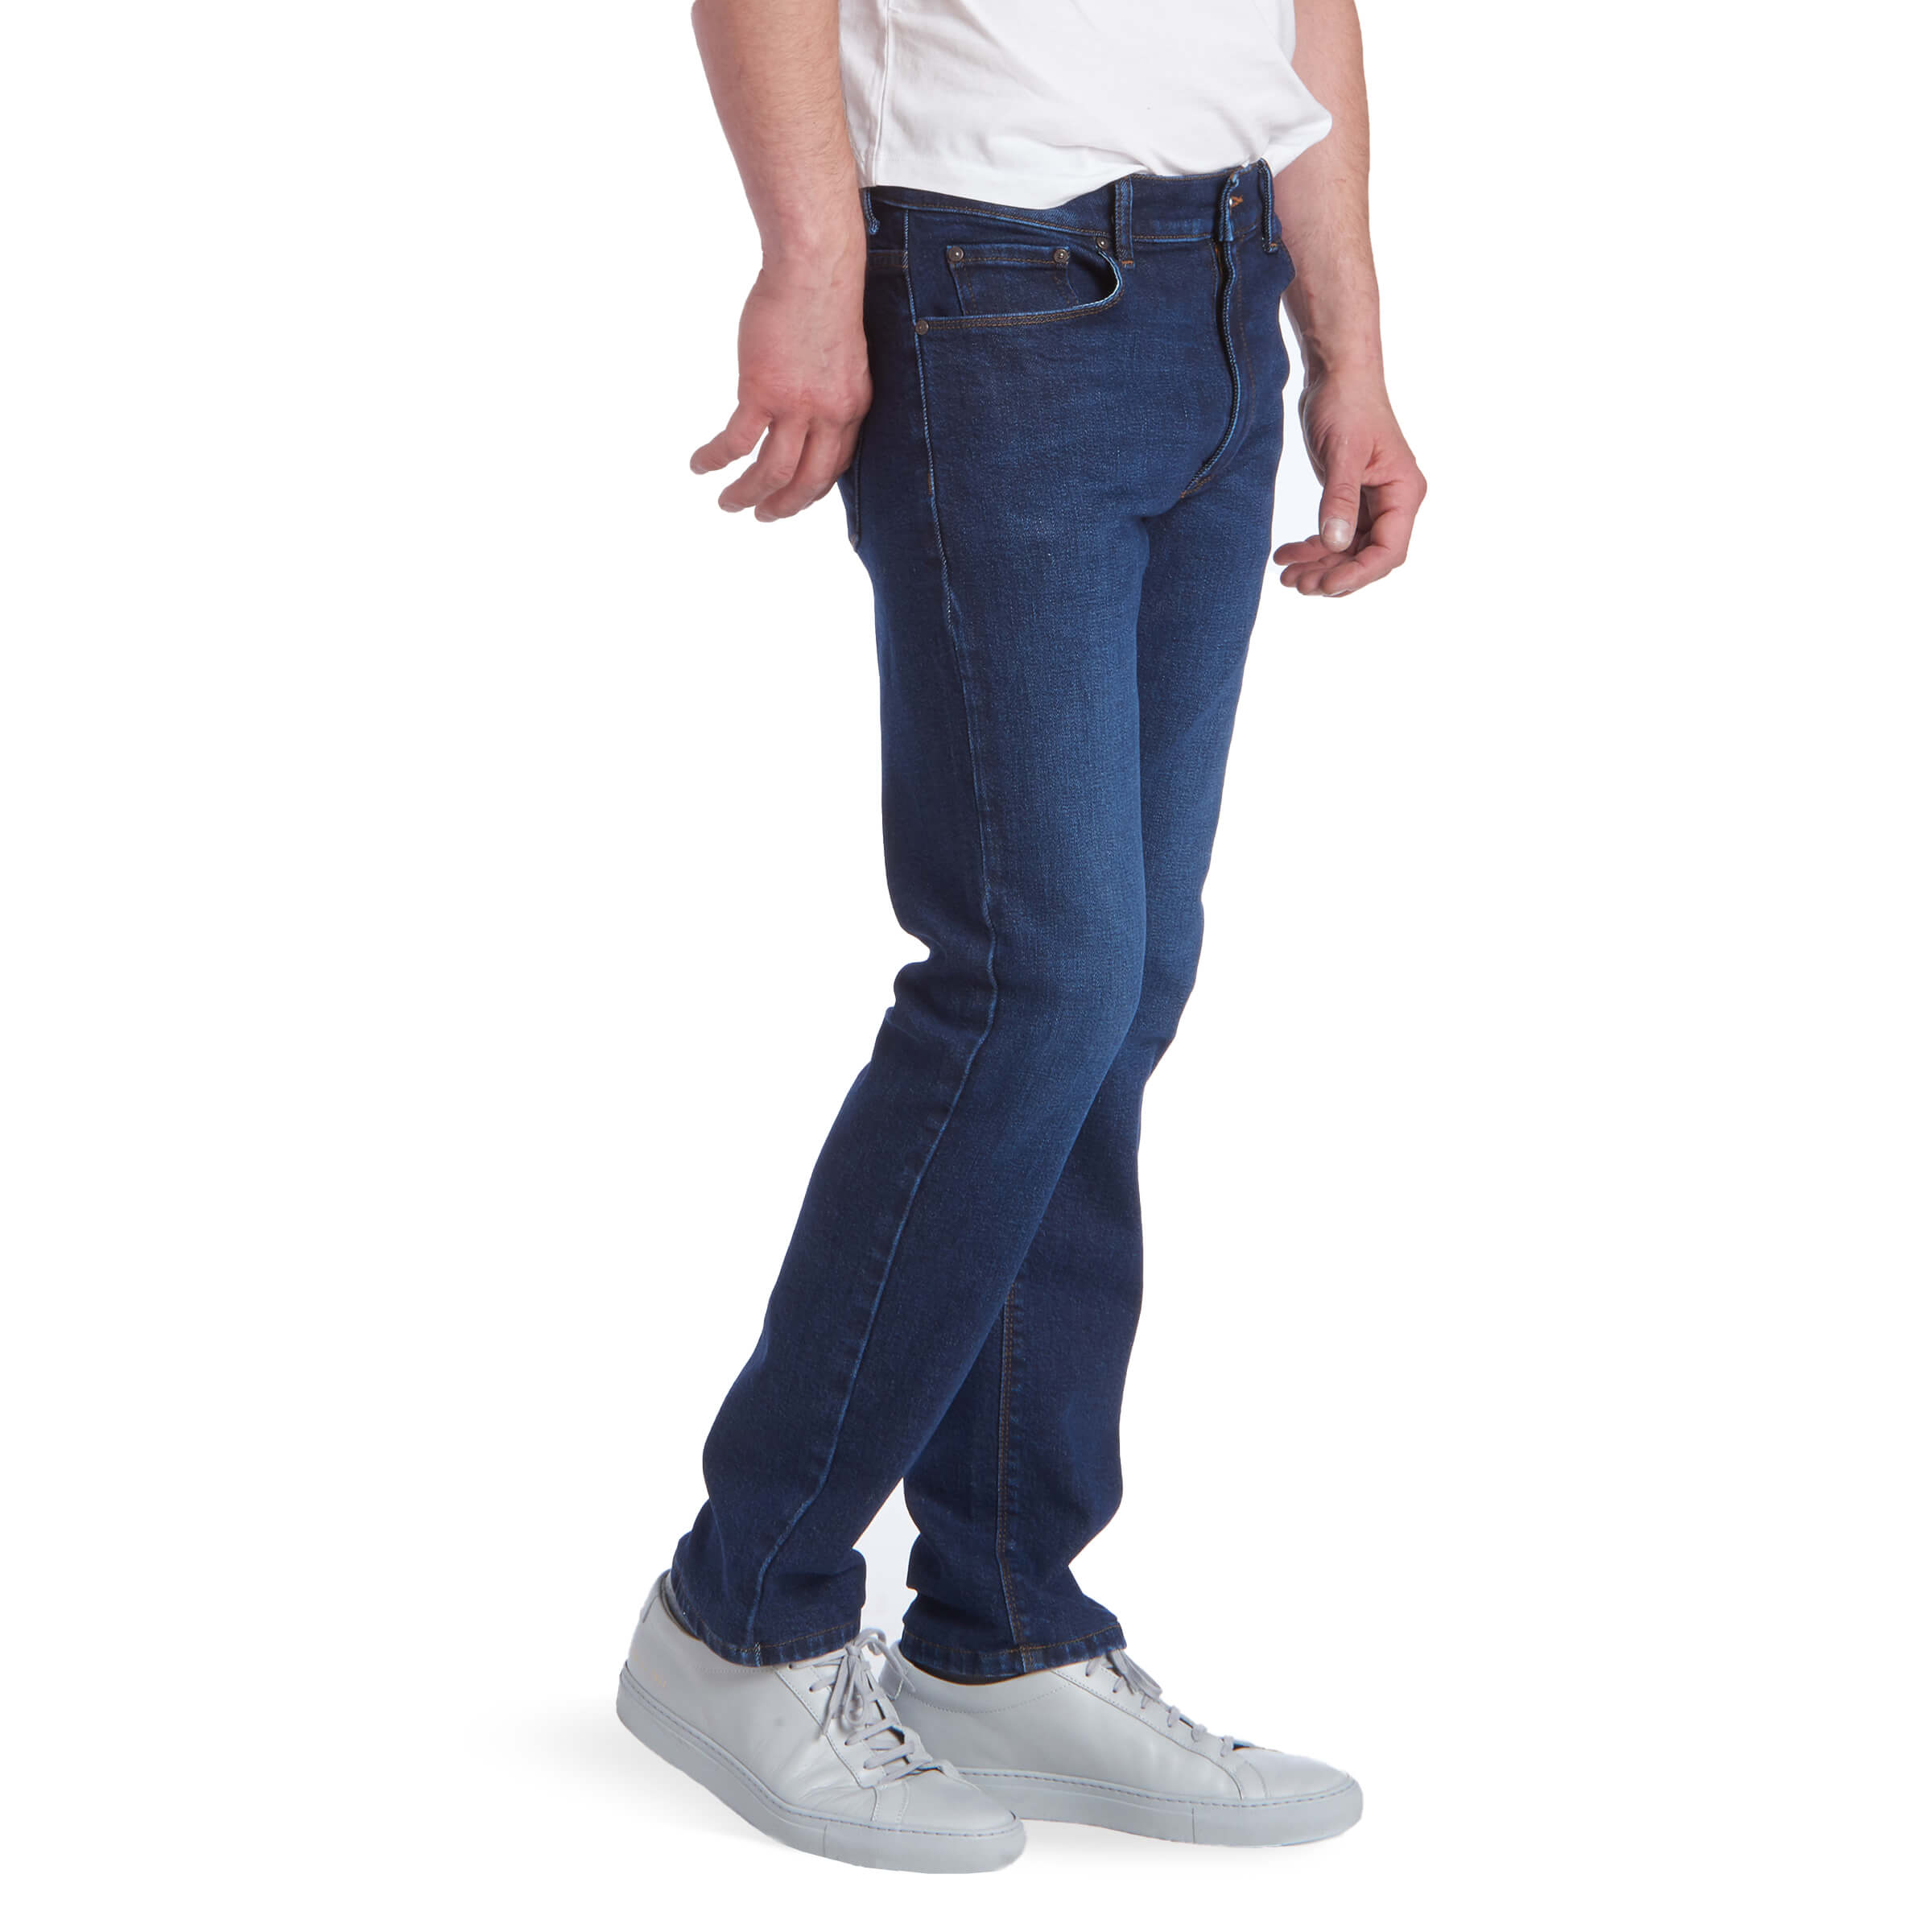 Men wearing Azul oscuro/medio Slim Grand Jeans